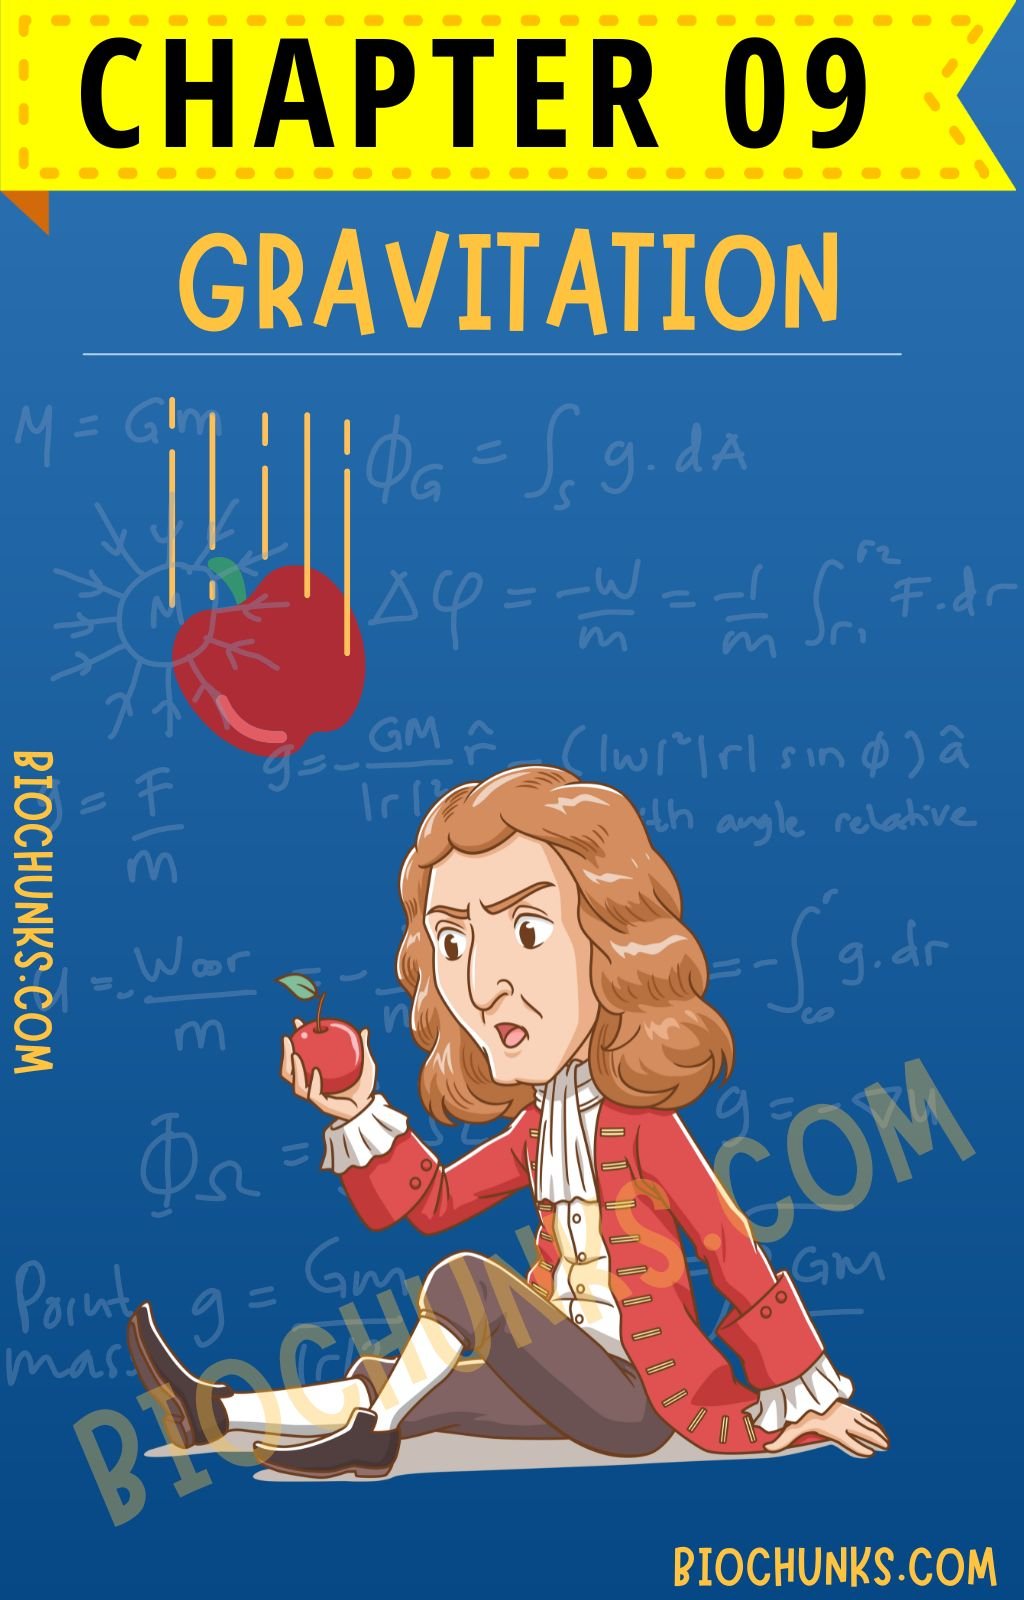 Gravitation Chapter 09 Class 9th biochunks.com